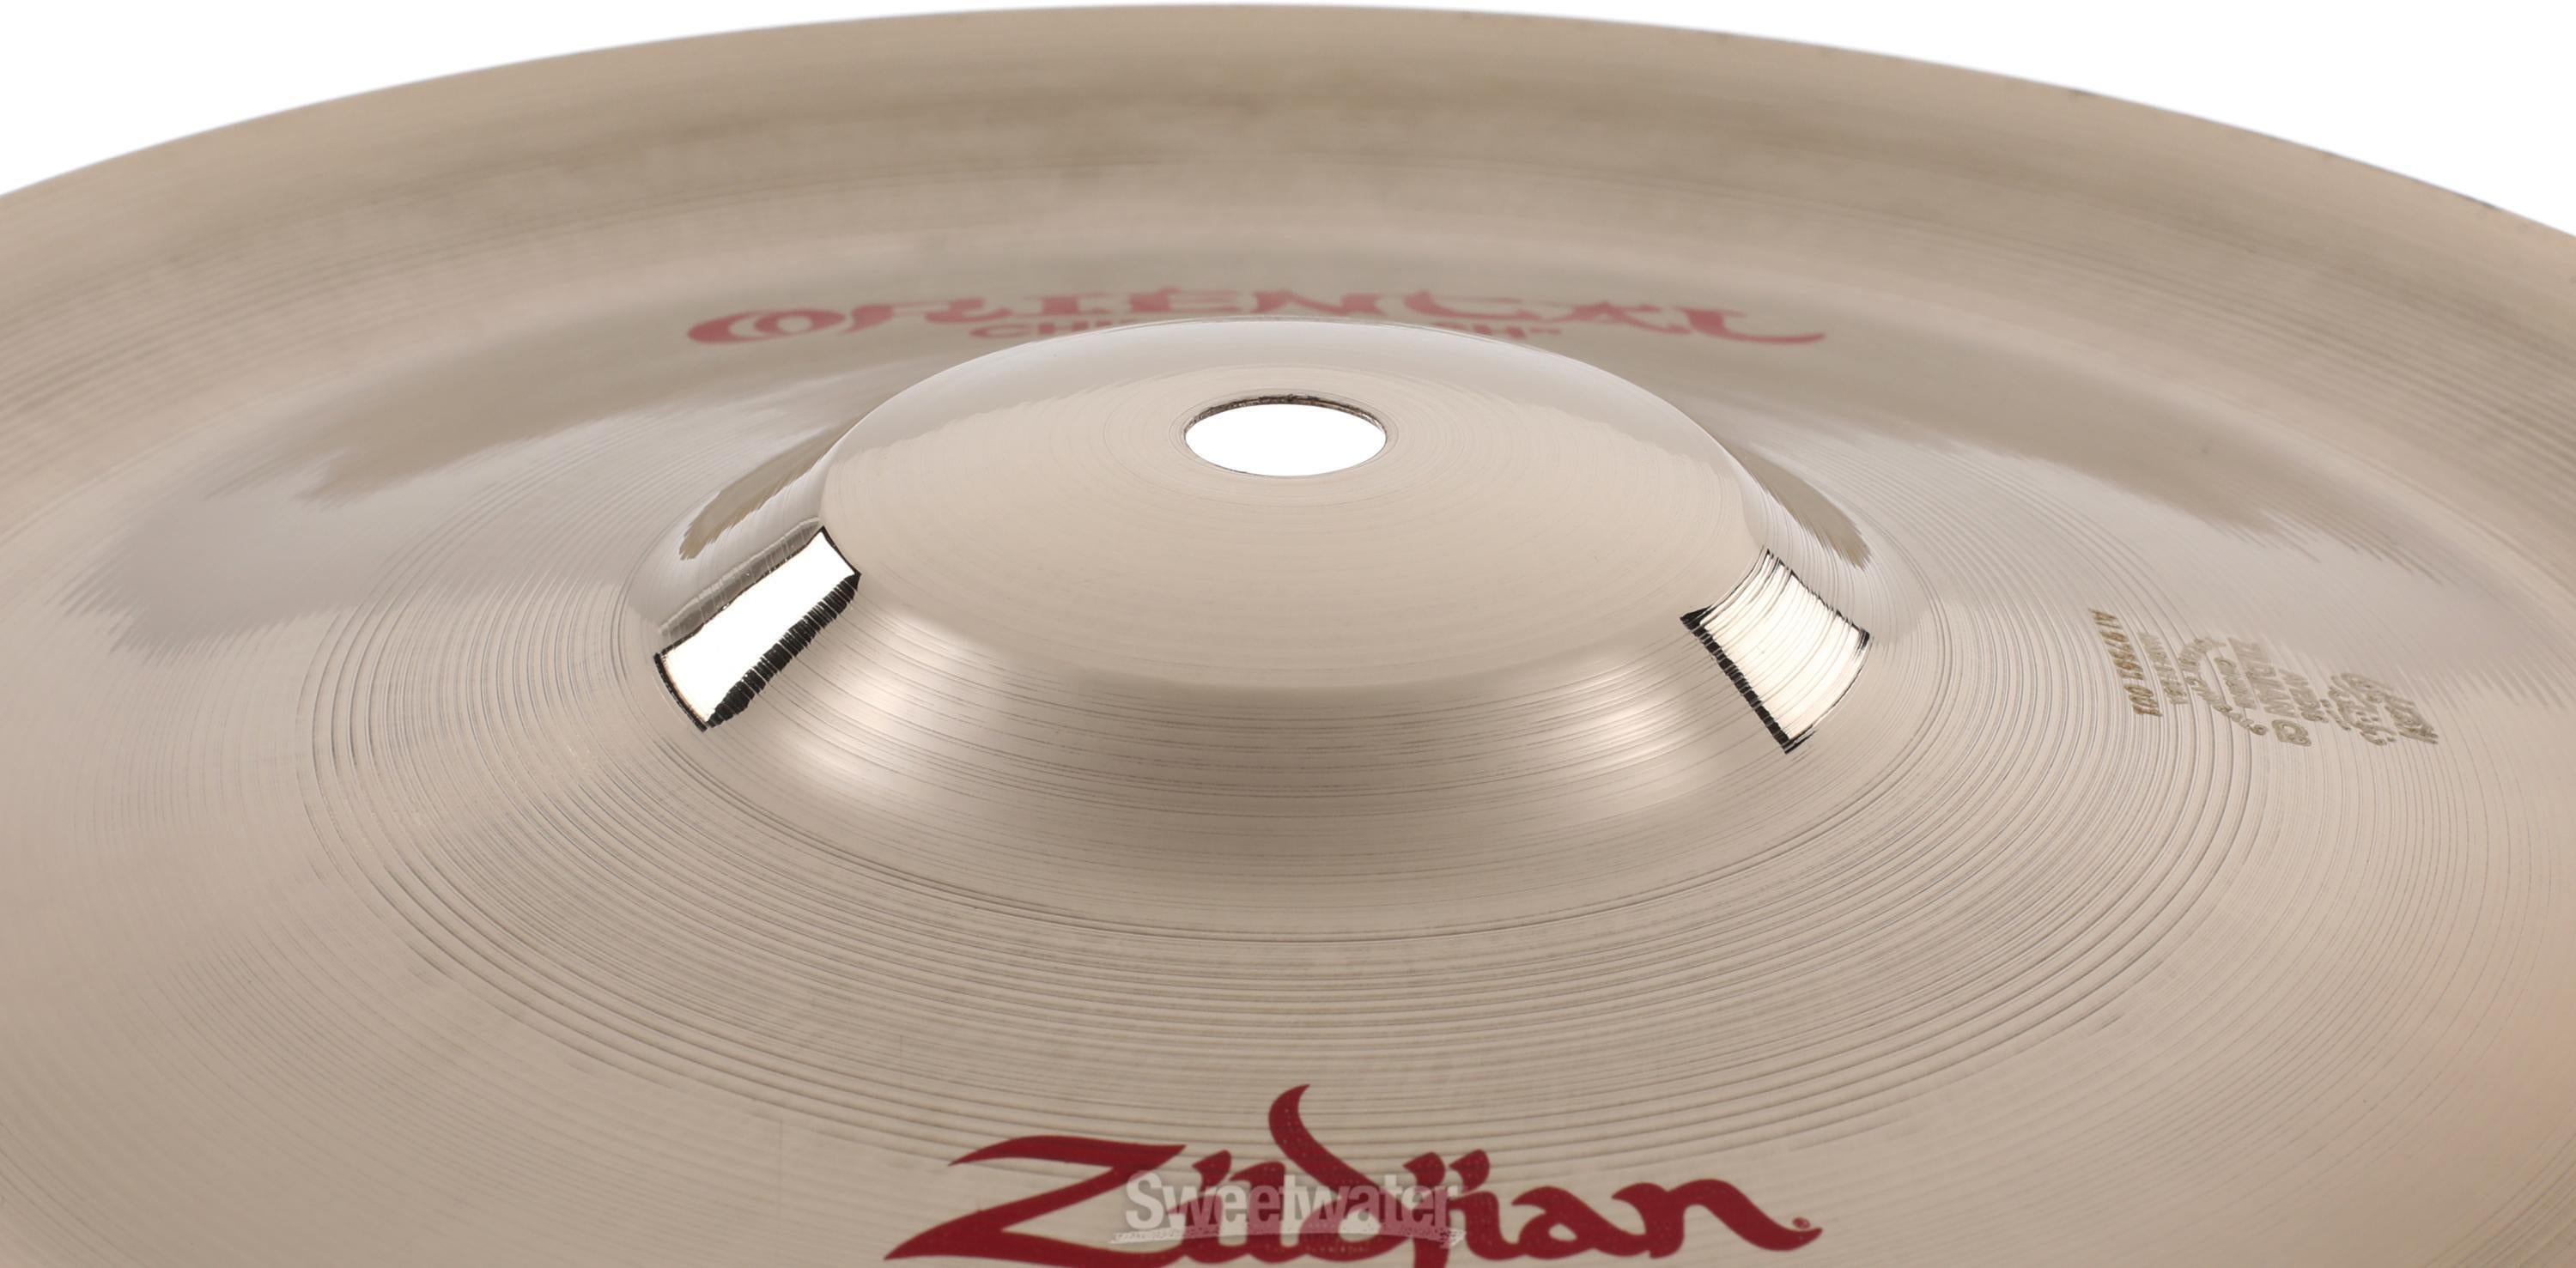 Zildjian 10 inch FX Oriental China Trash Cymbal